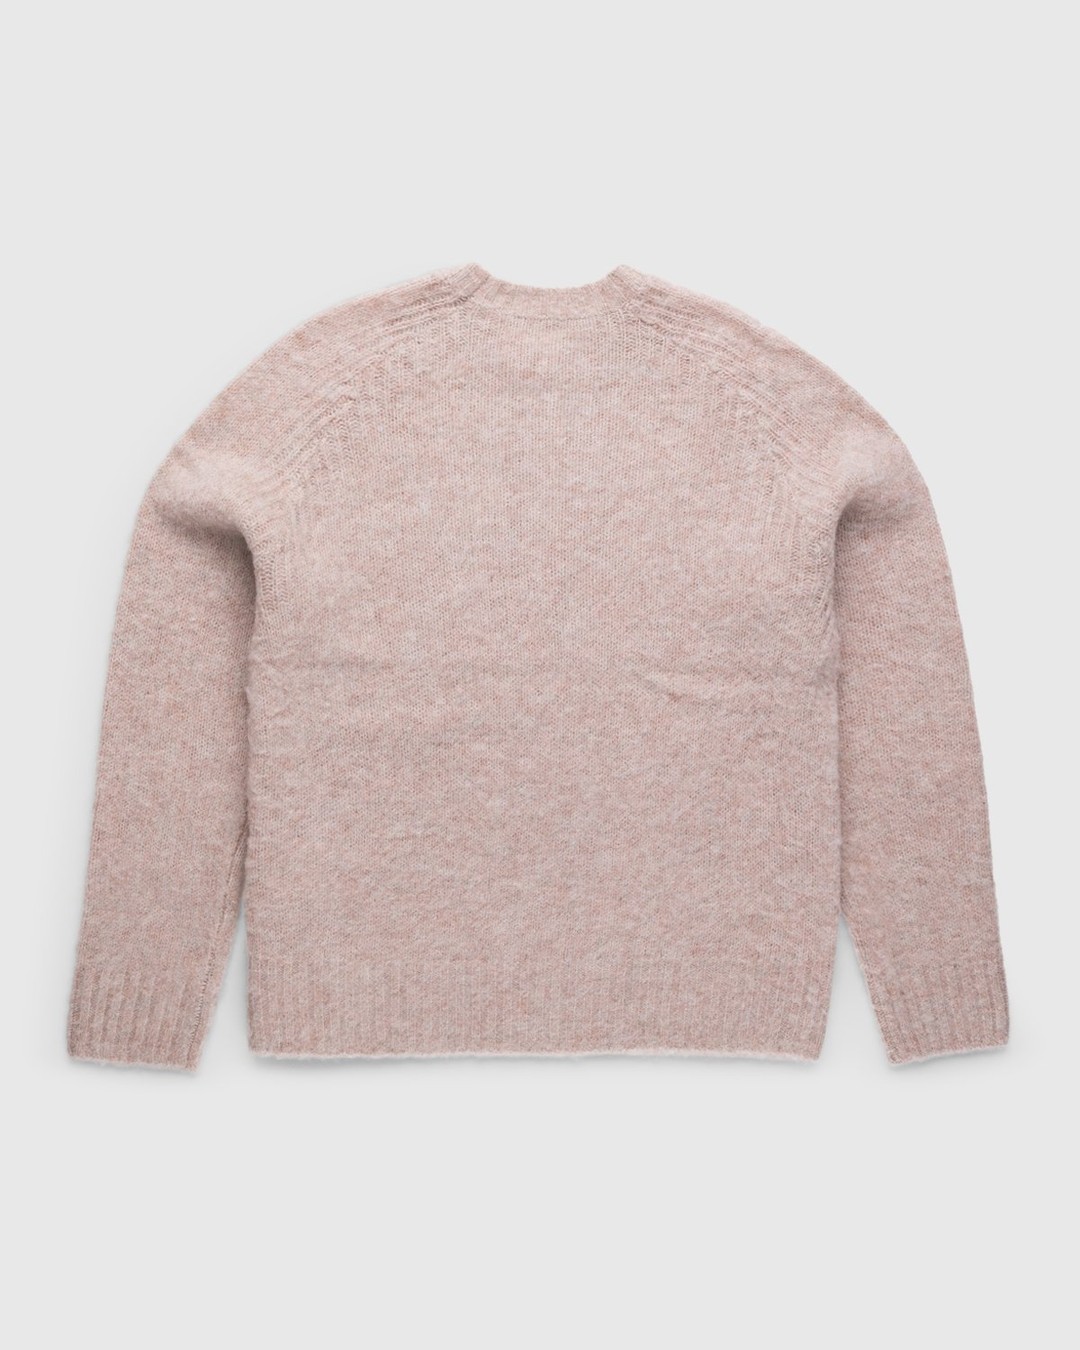 Acne Studios – Knit Sweater Pastel Pink - Knitwear - Pink - Image 2